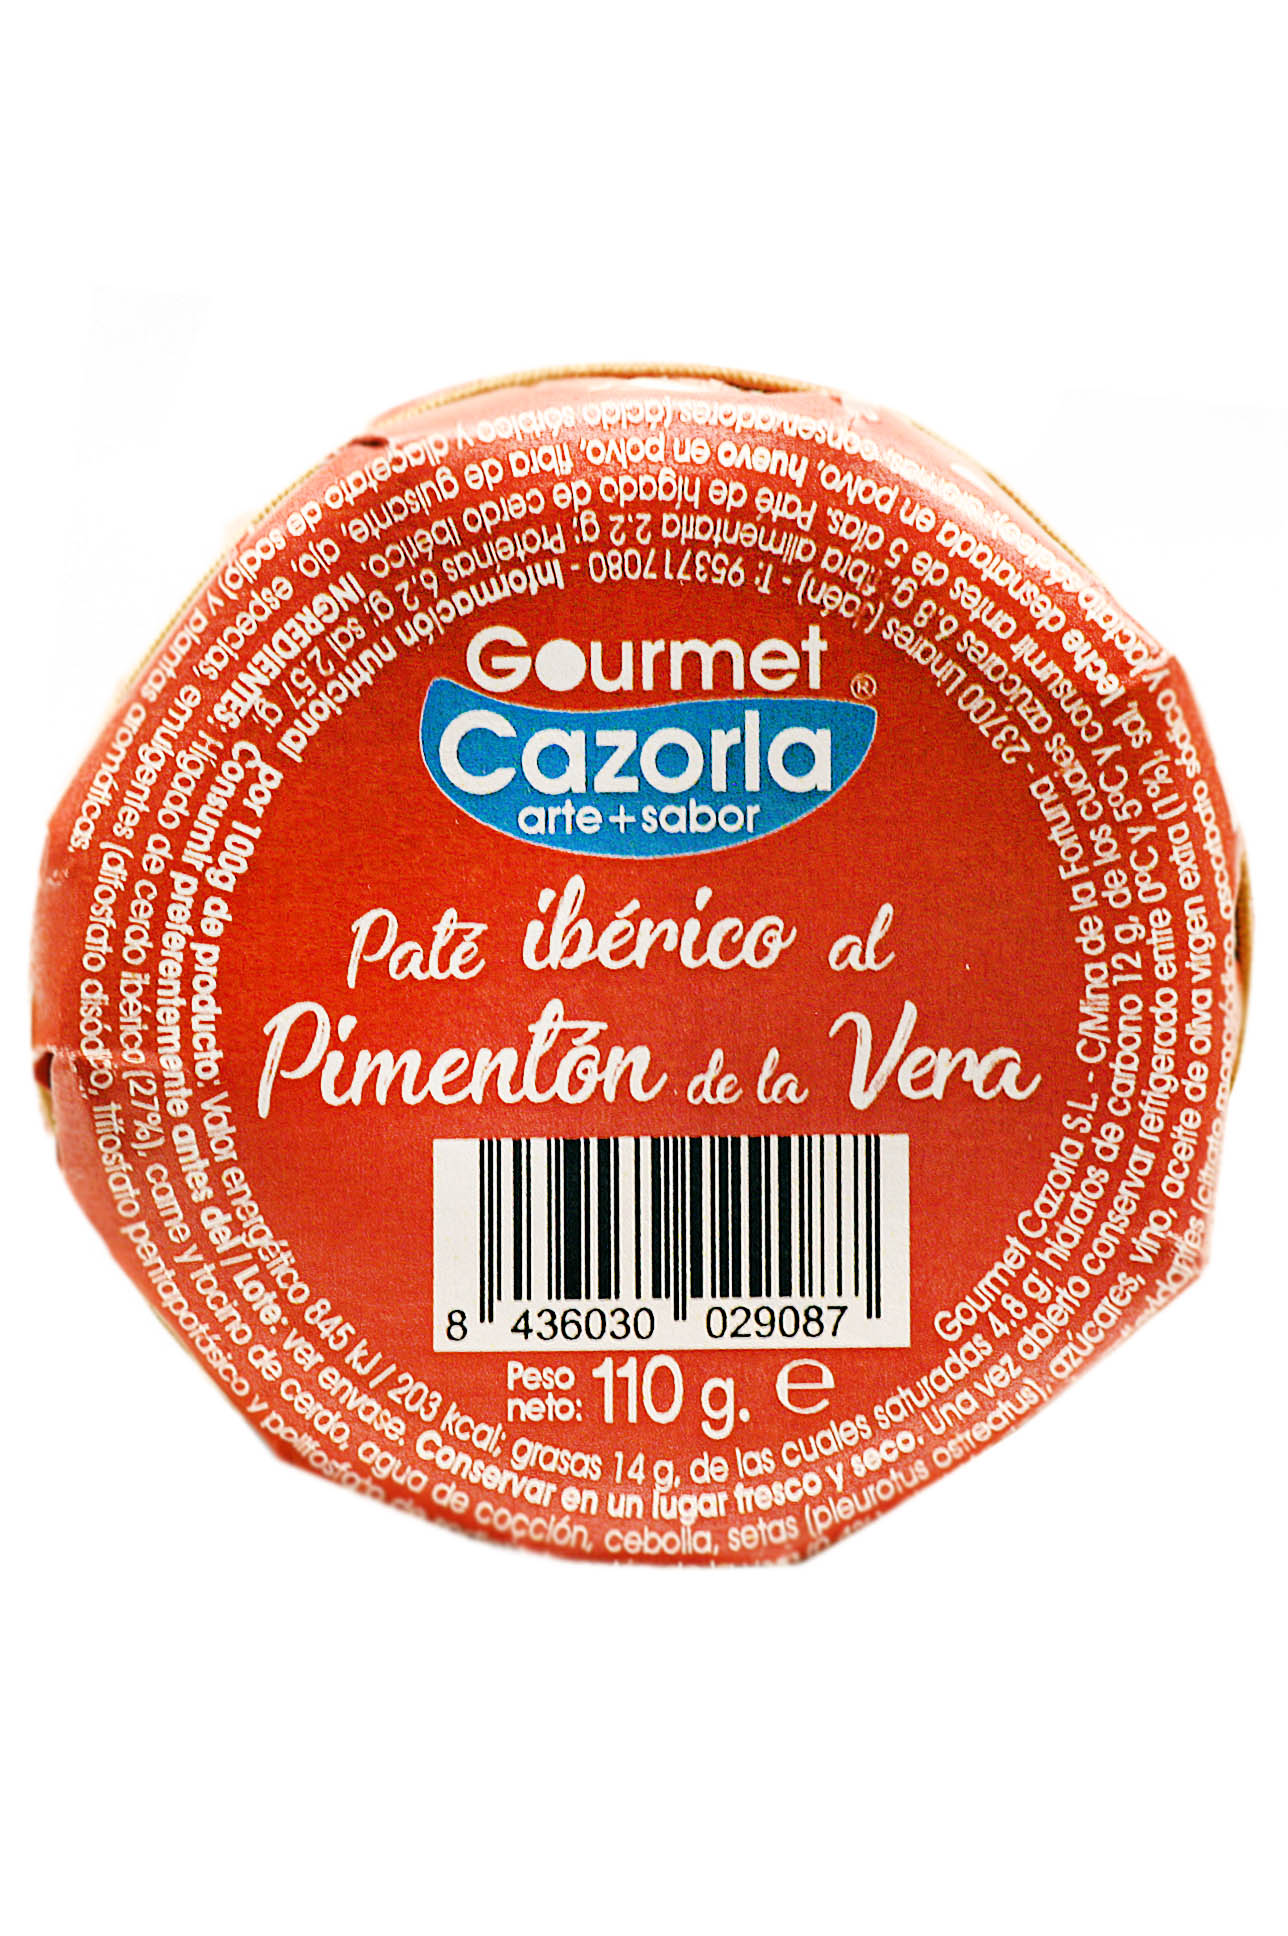 Iberian ham paté with spicy paprika